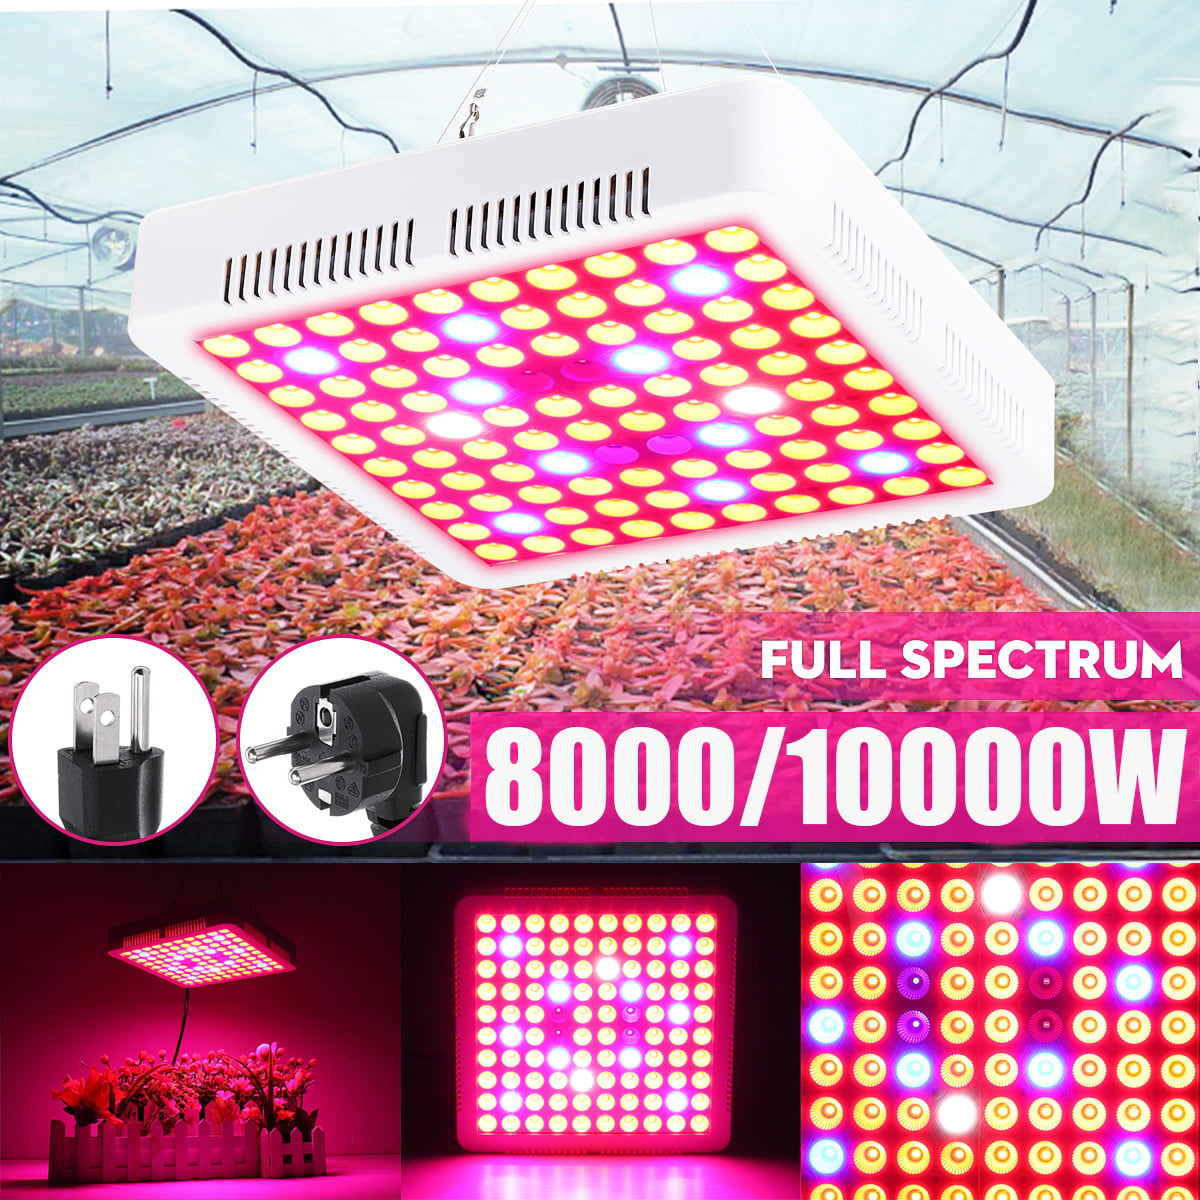 Details about   4x E26 E27 LED Grow Light Bulb Full Spectrum Lamp IR for Indoor Plant Veg Bloom 